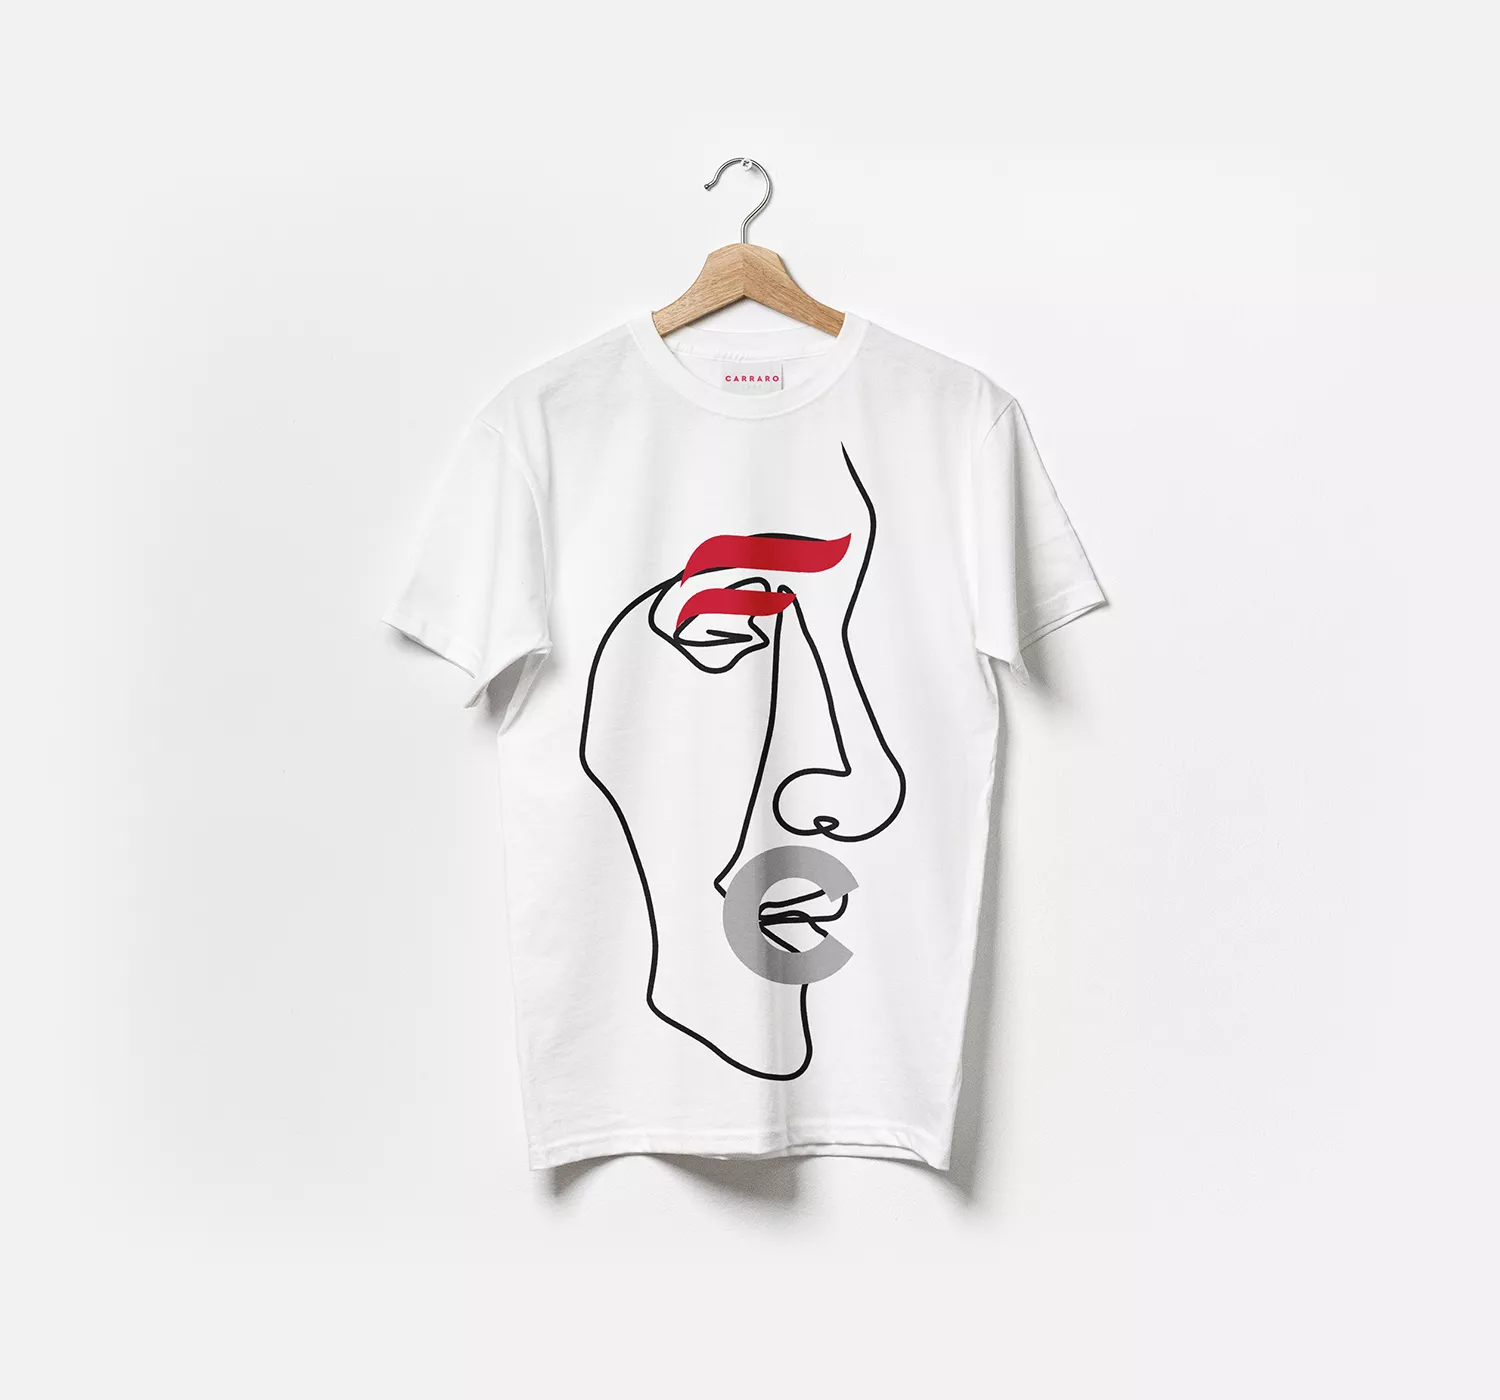 Merchandising - T-shirt – Uomo / Bianca - Shop online Caffè Carraro